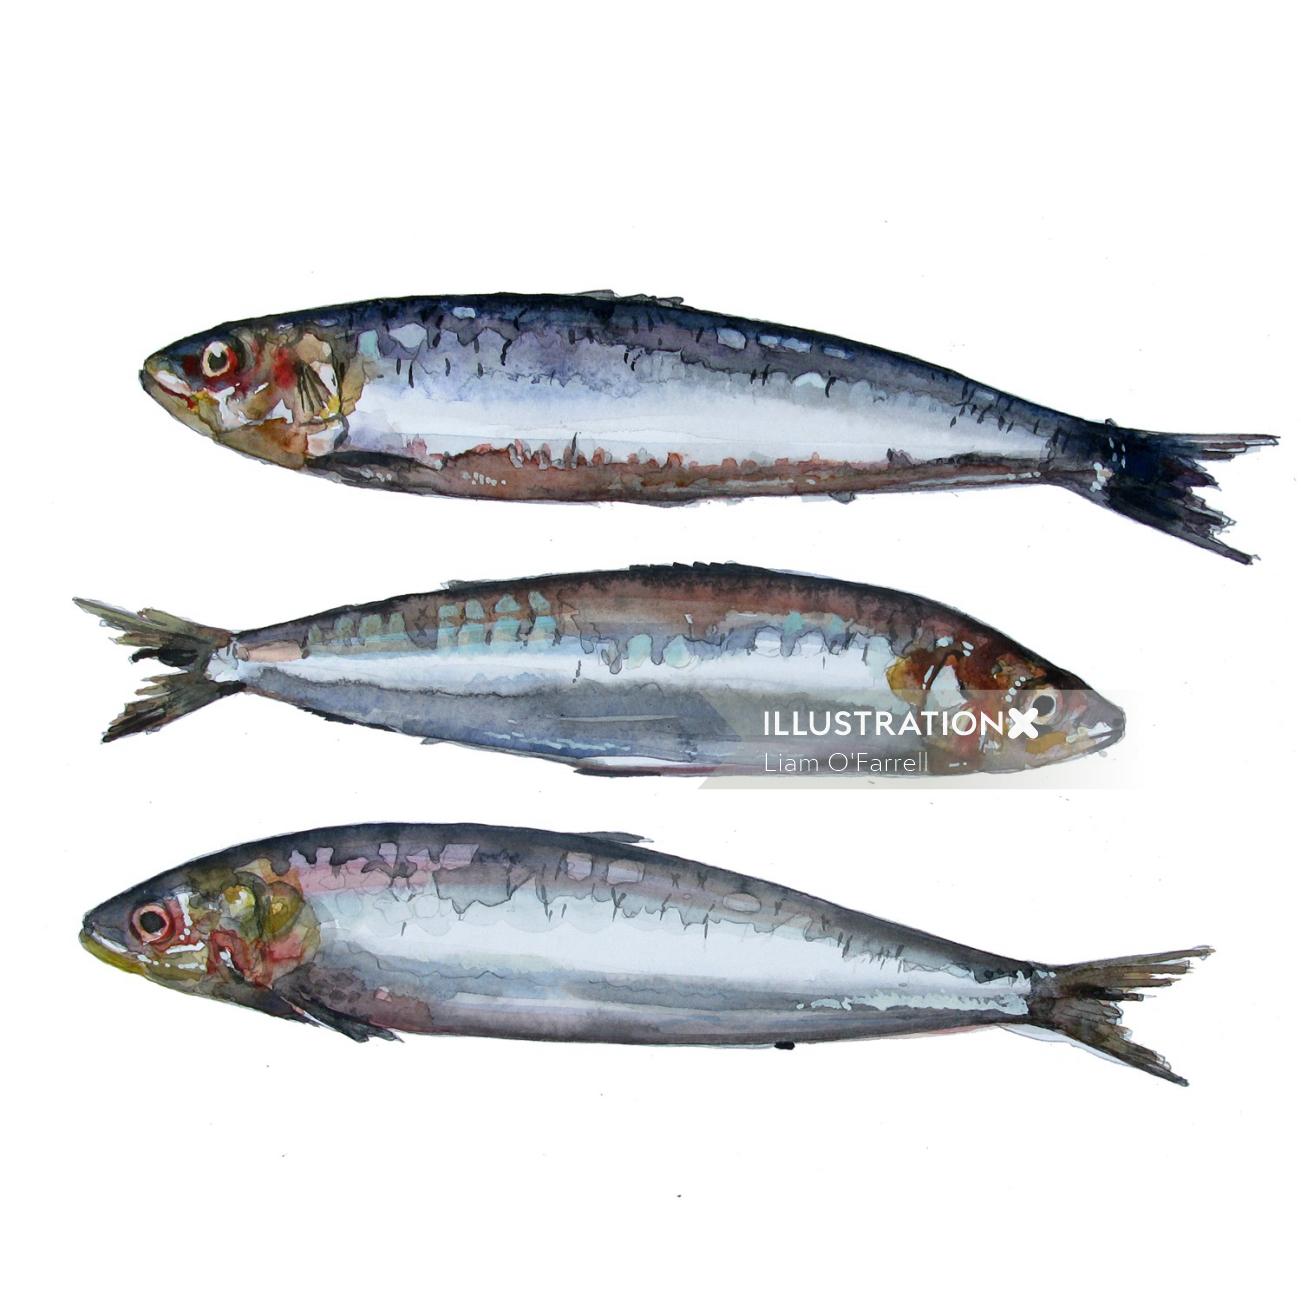 Illustration of Sardines